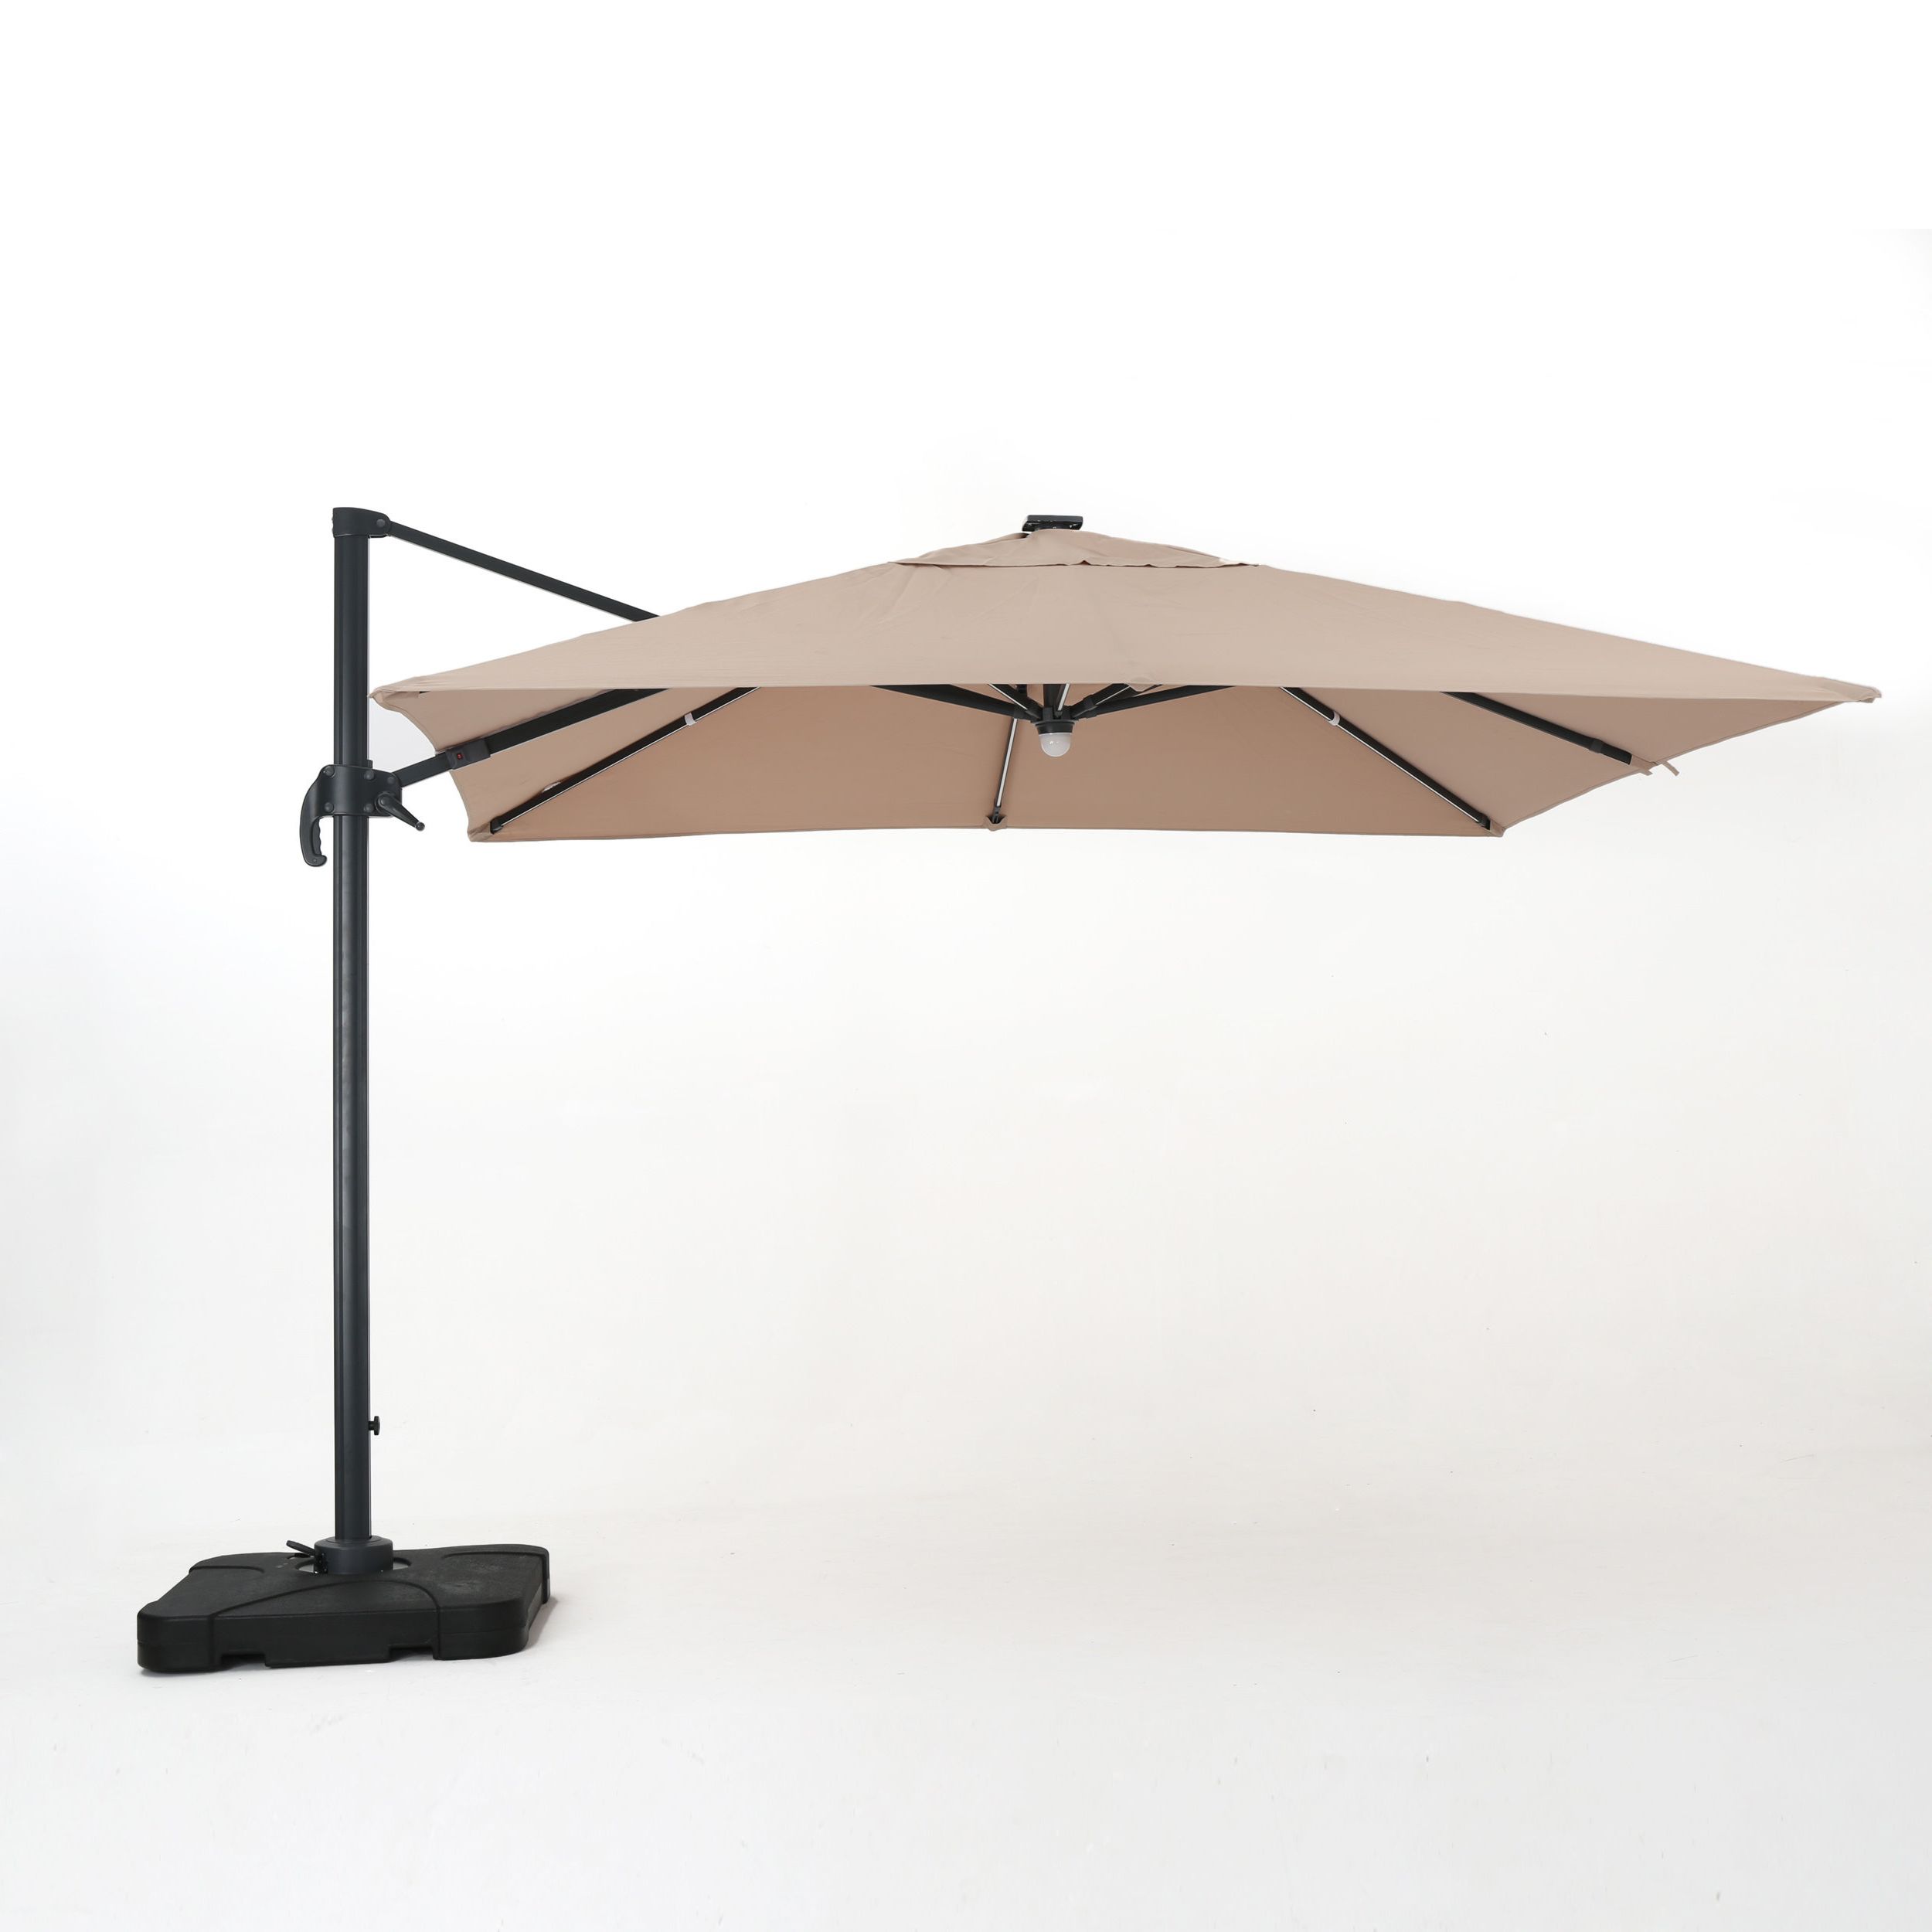 Carlisle Square Cantilever Sunbrella Umbrellas Within 2019 Jendayi Square Cantilever Umbrella (View 16 of 20)